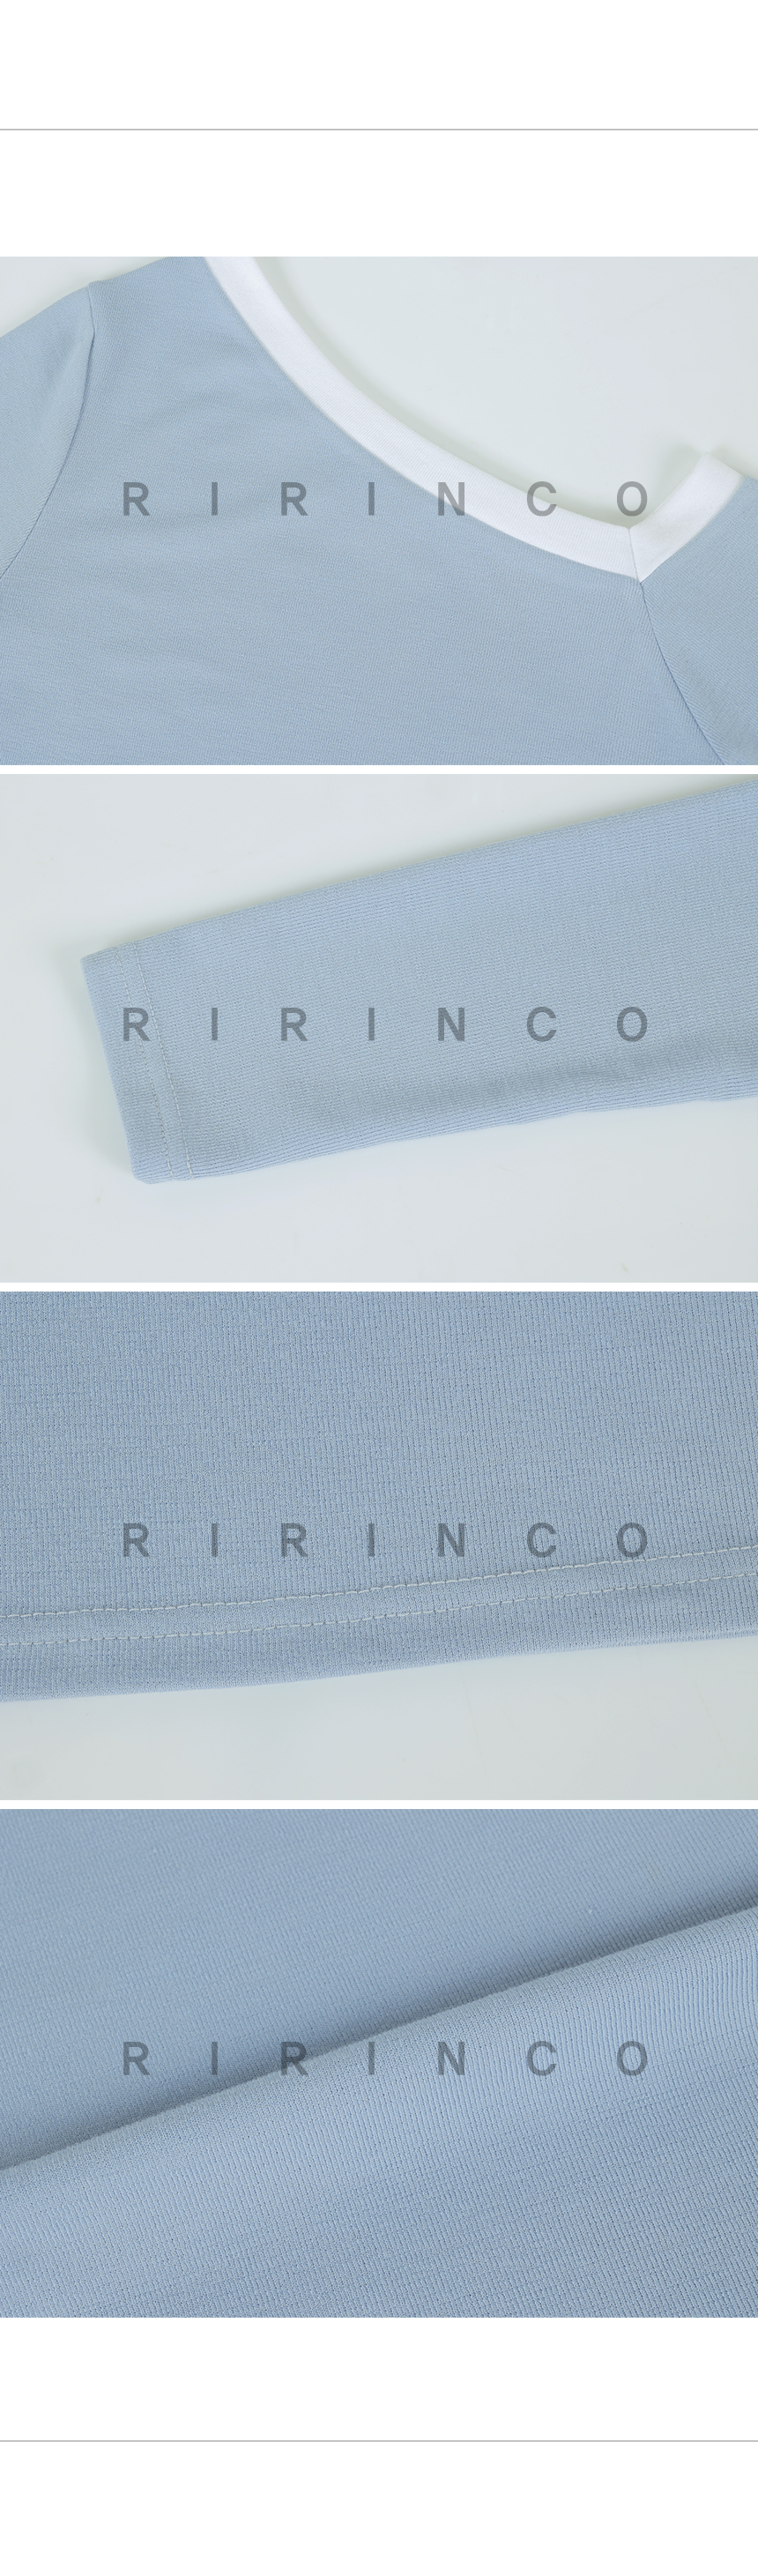 RIRINCO 配色ワンショルダーTシャツ